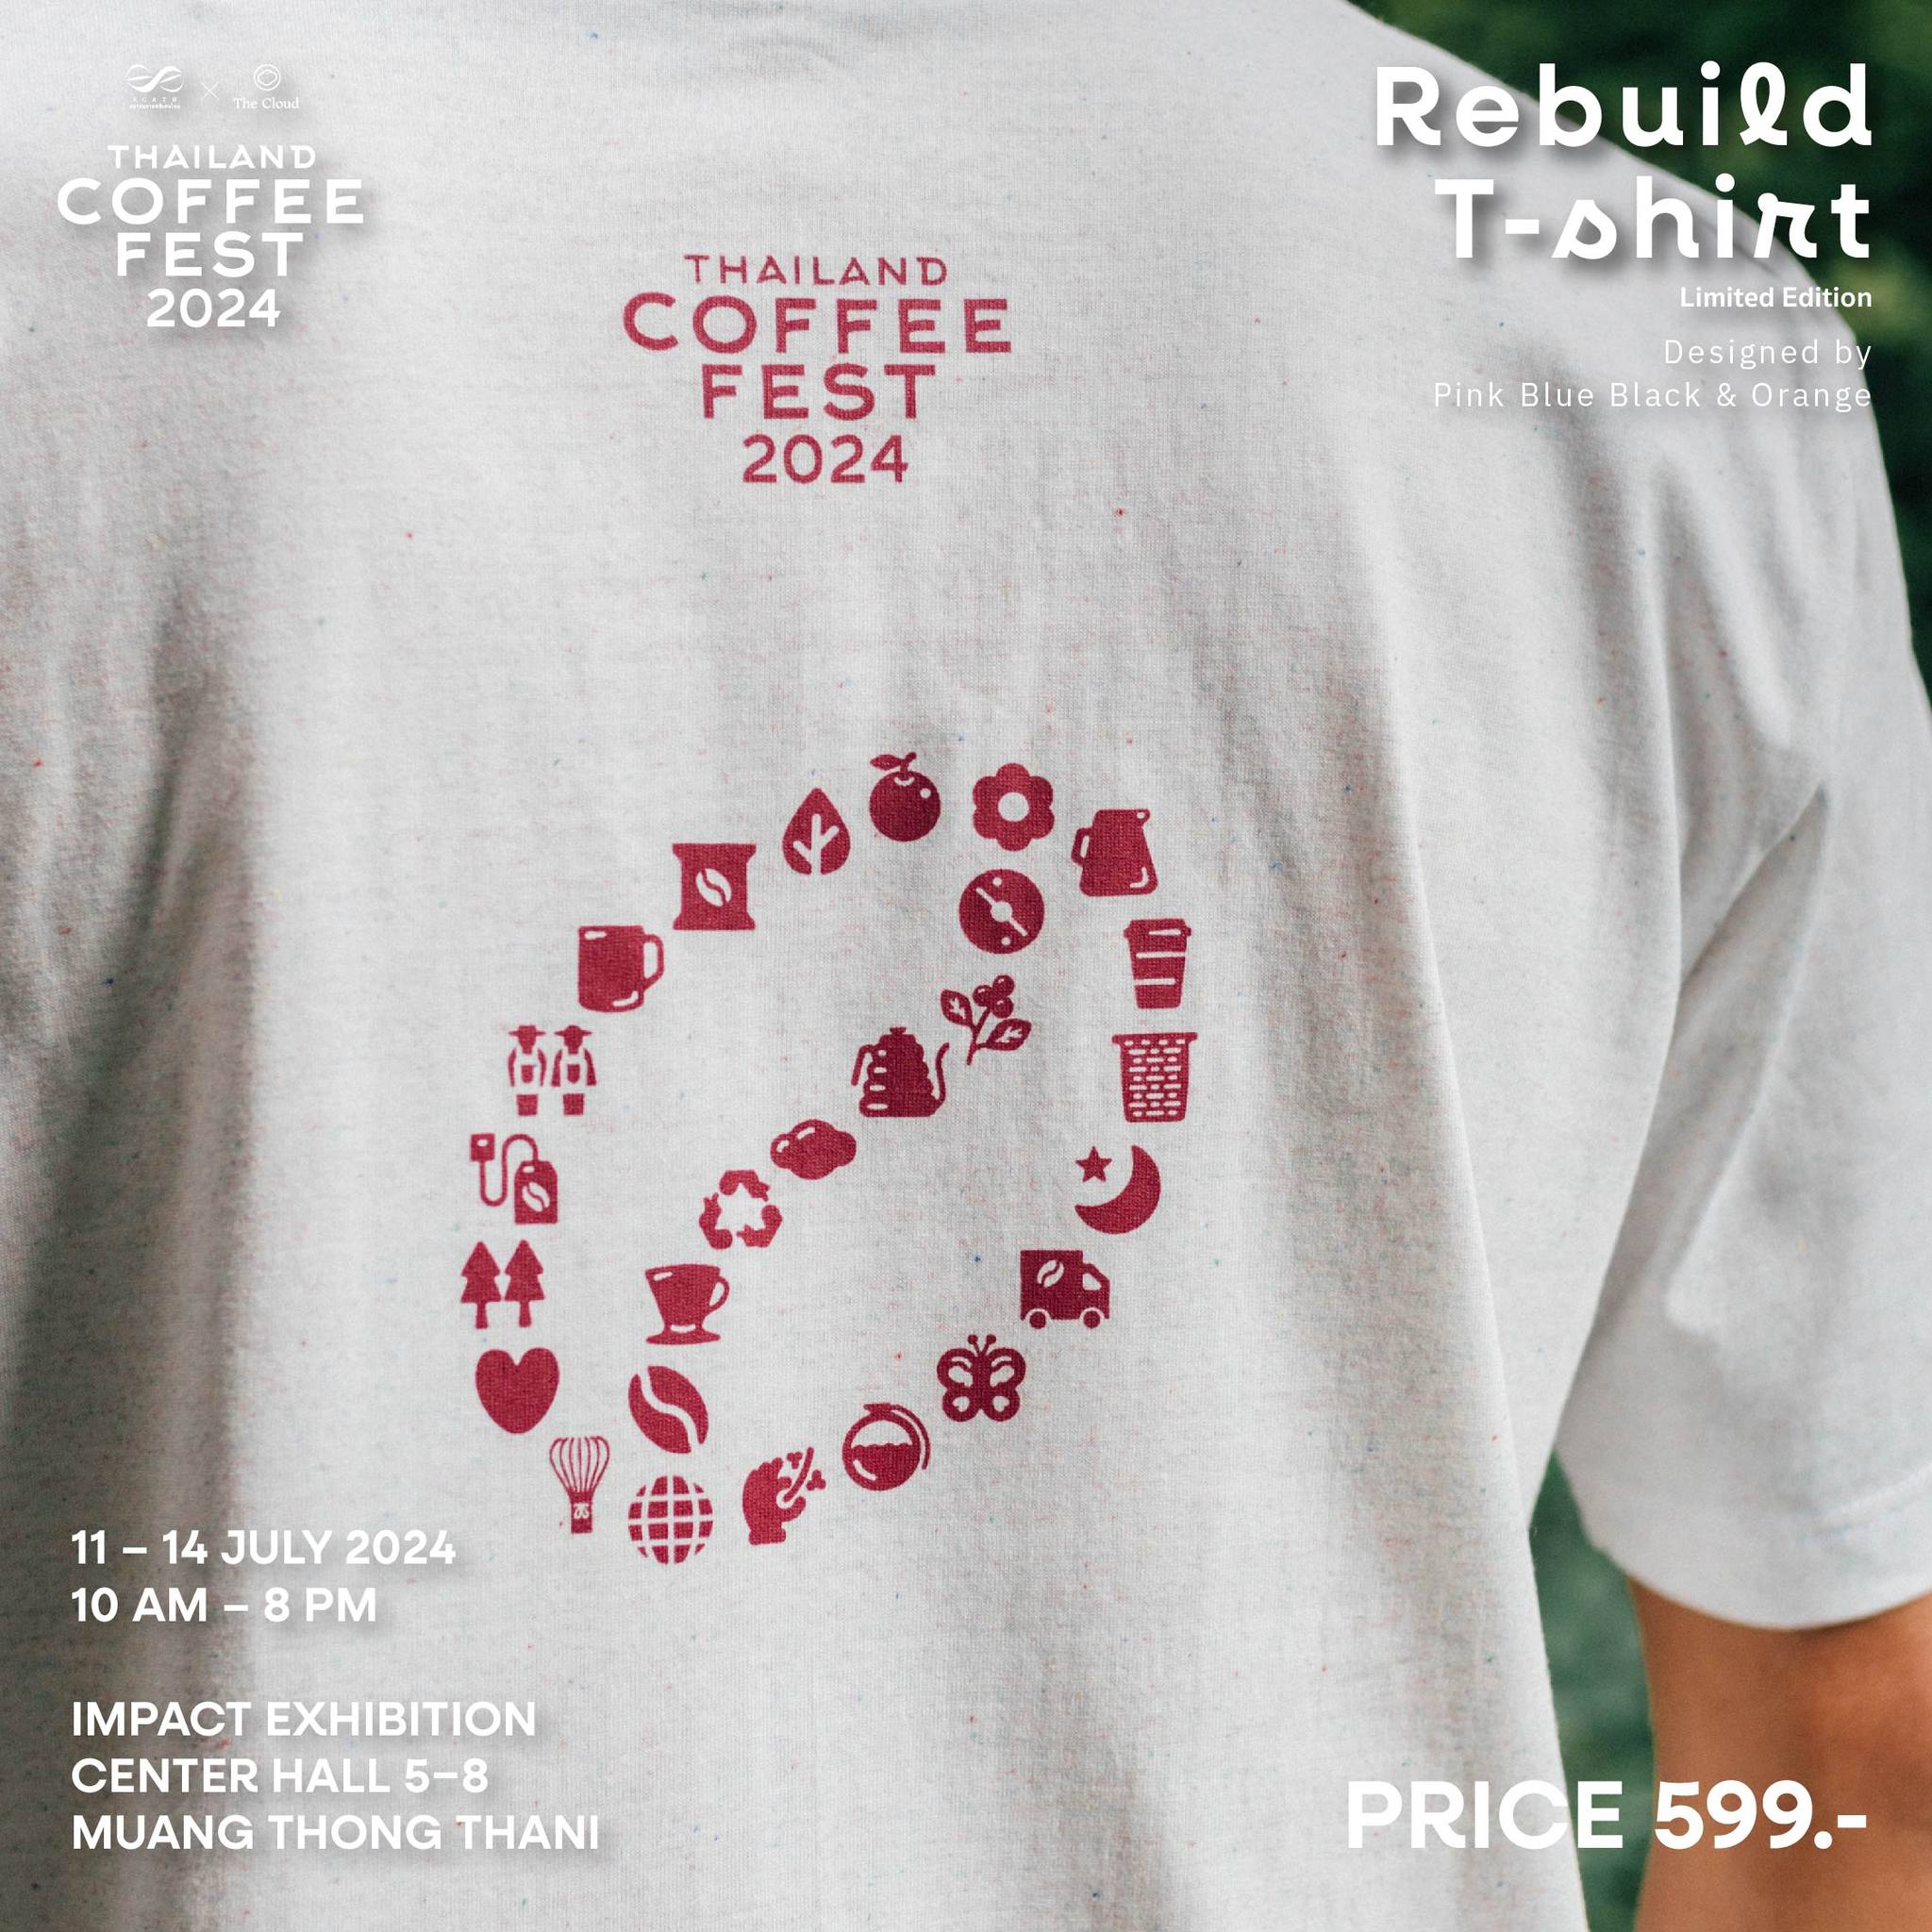 Rebuild T-Shirt by Revife Fiber, Thailand Coffee Fest 2023 : Good Coffee for Everyone